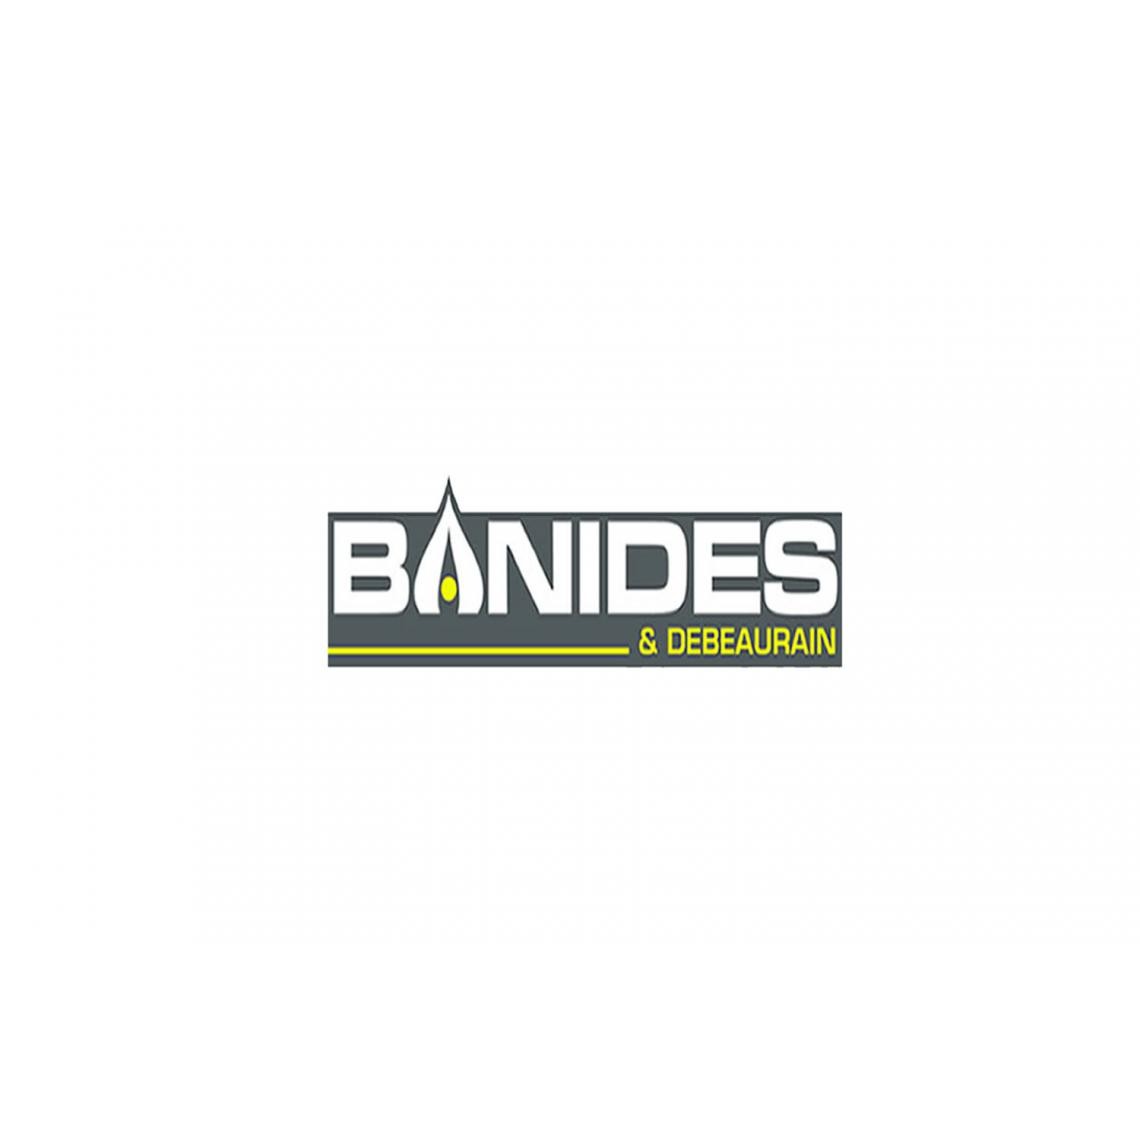 Banides & Debeaurain - raccord coudé - 180 degrés - a joint plat - gaz - bd2206 - ecrou 1/2 - a braser -14 dn - nf - Flexible gaz